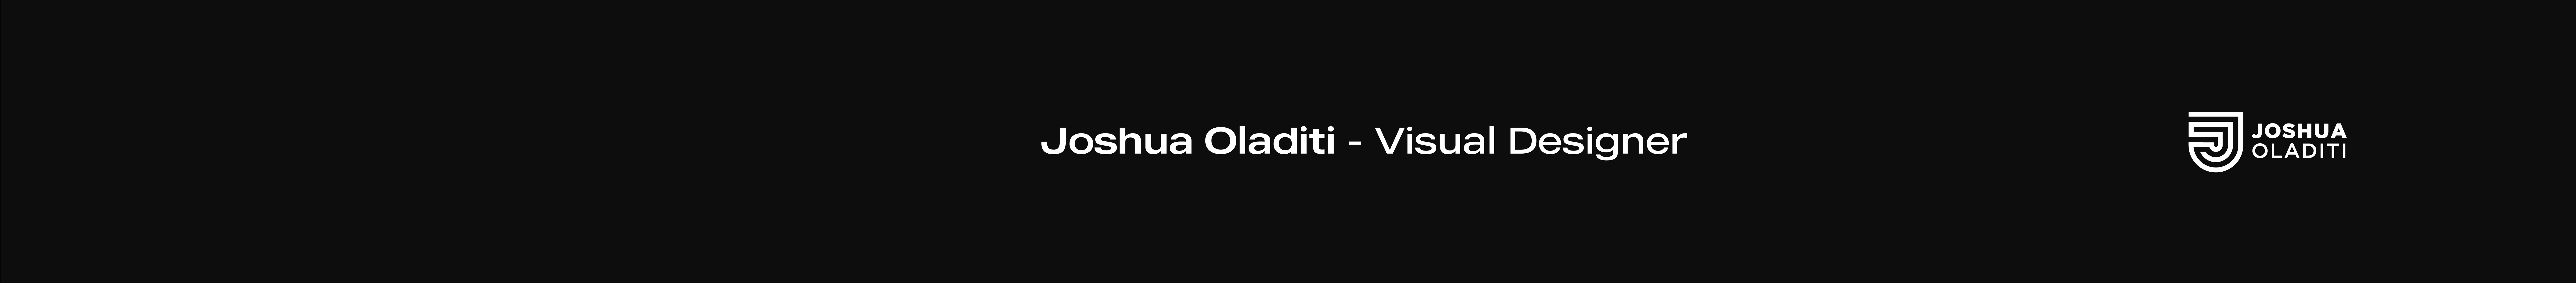 Joshua Oladiti's profile banner